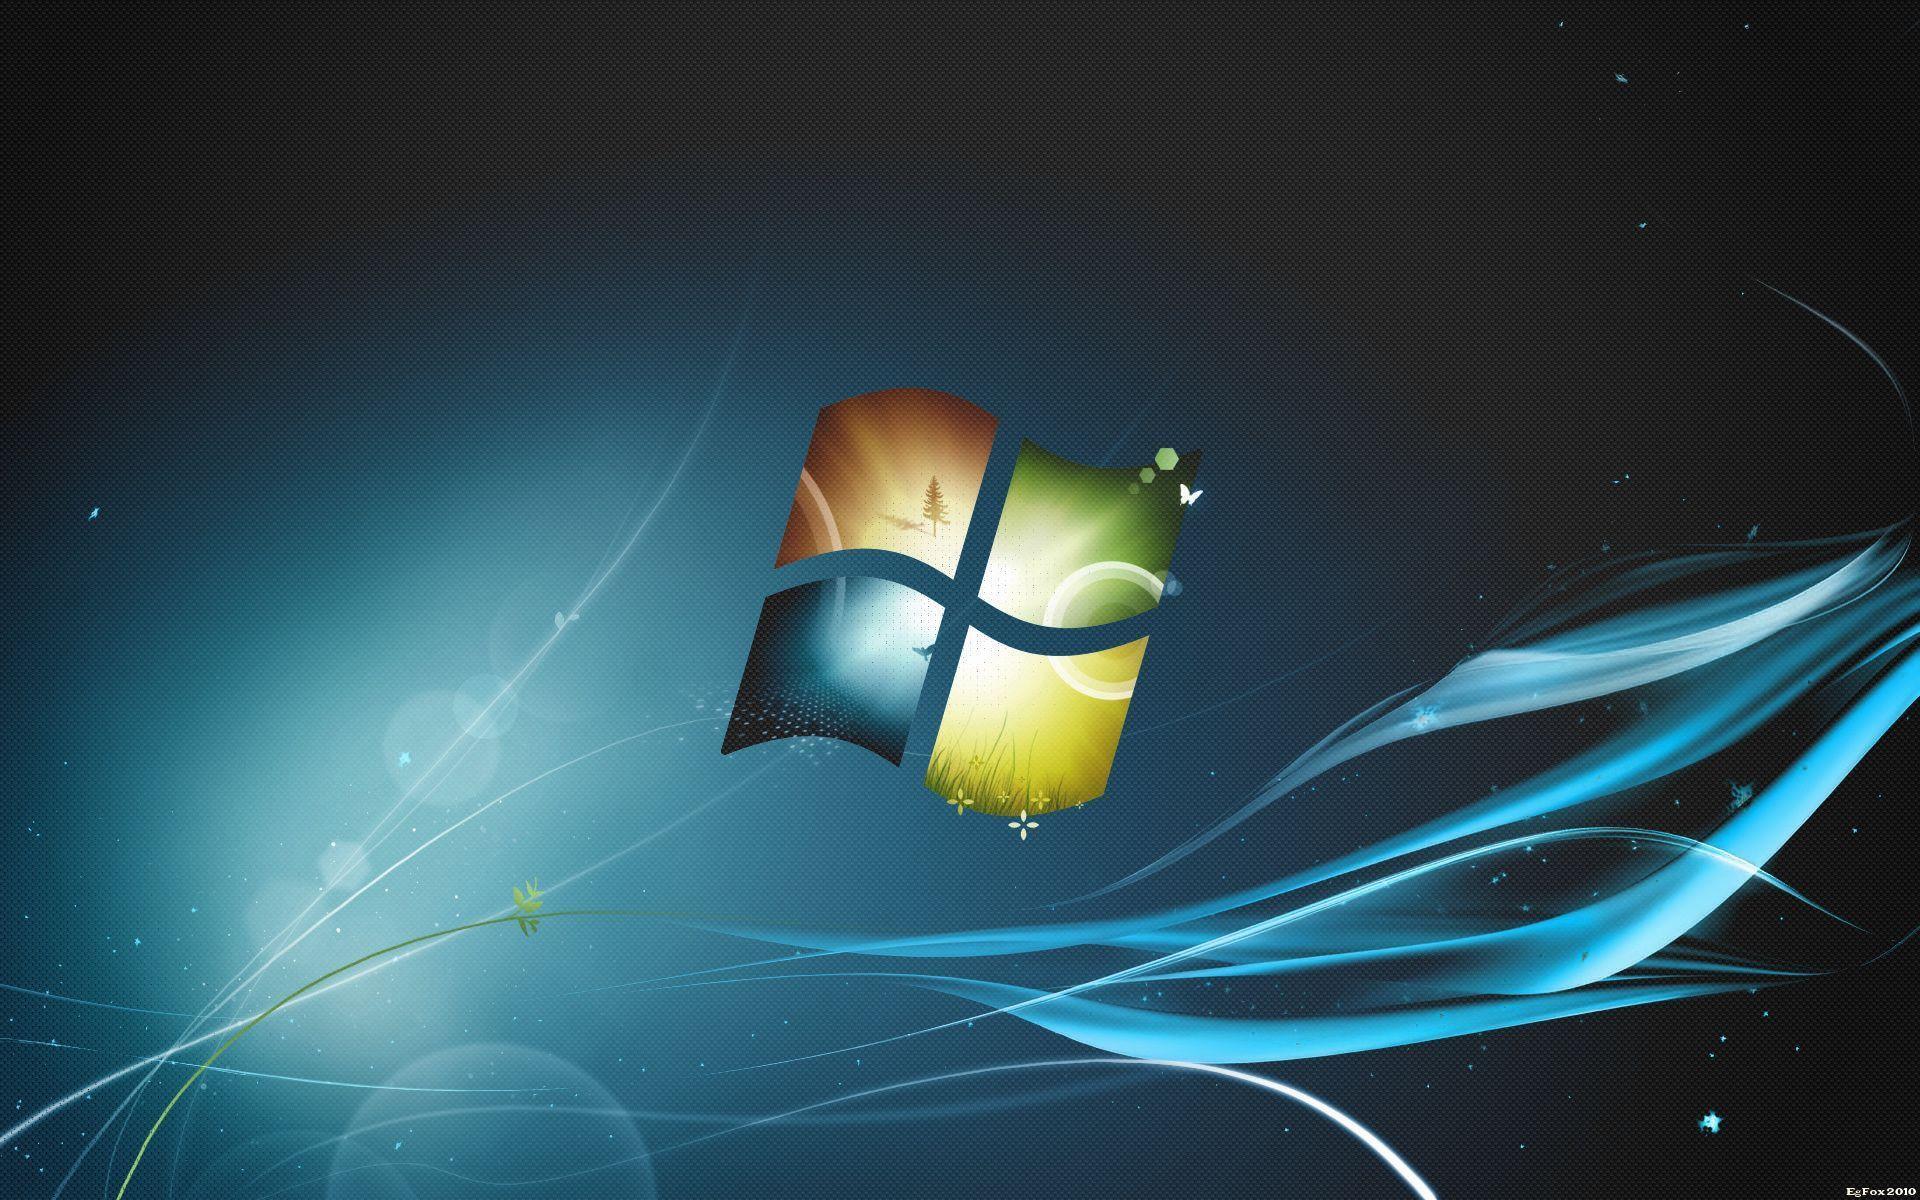 Windows 7 Background Wallpaper Desktop. FreeH Wallpaper